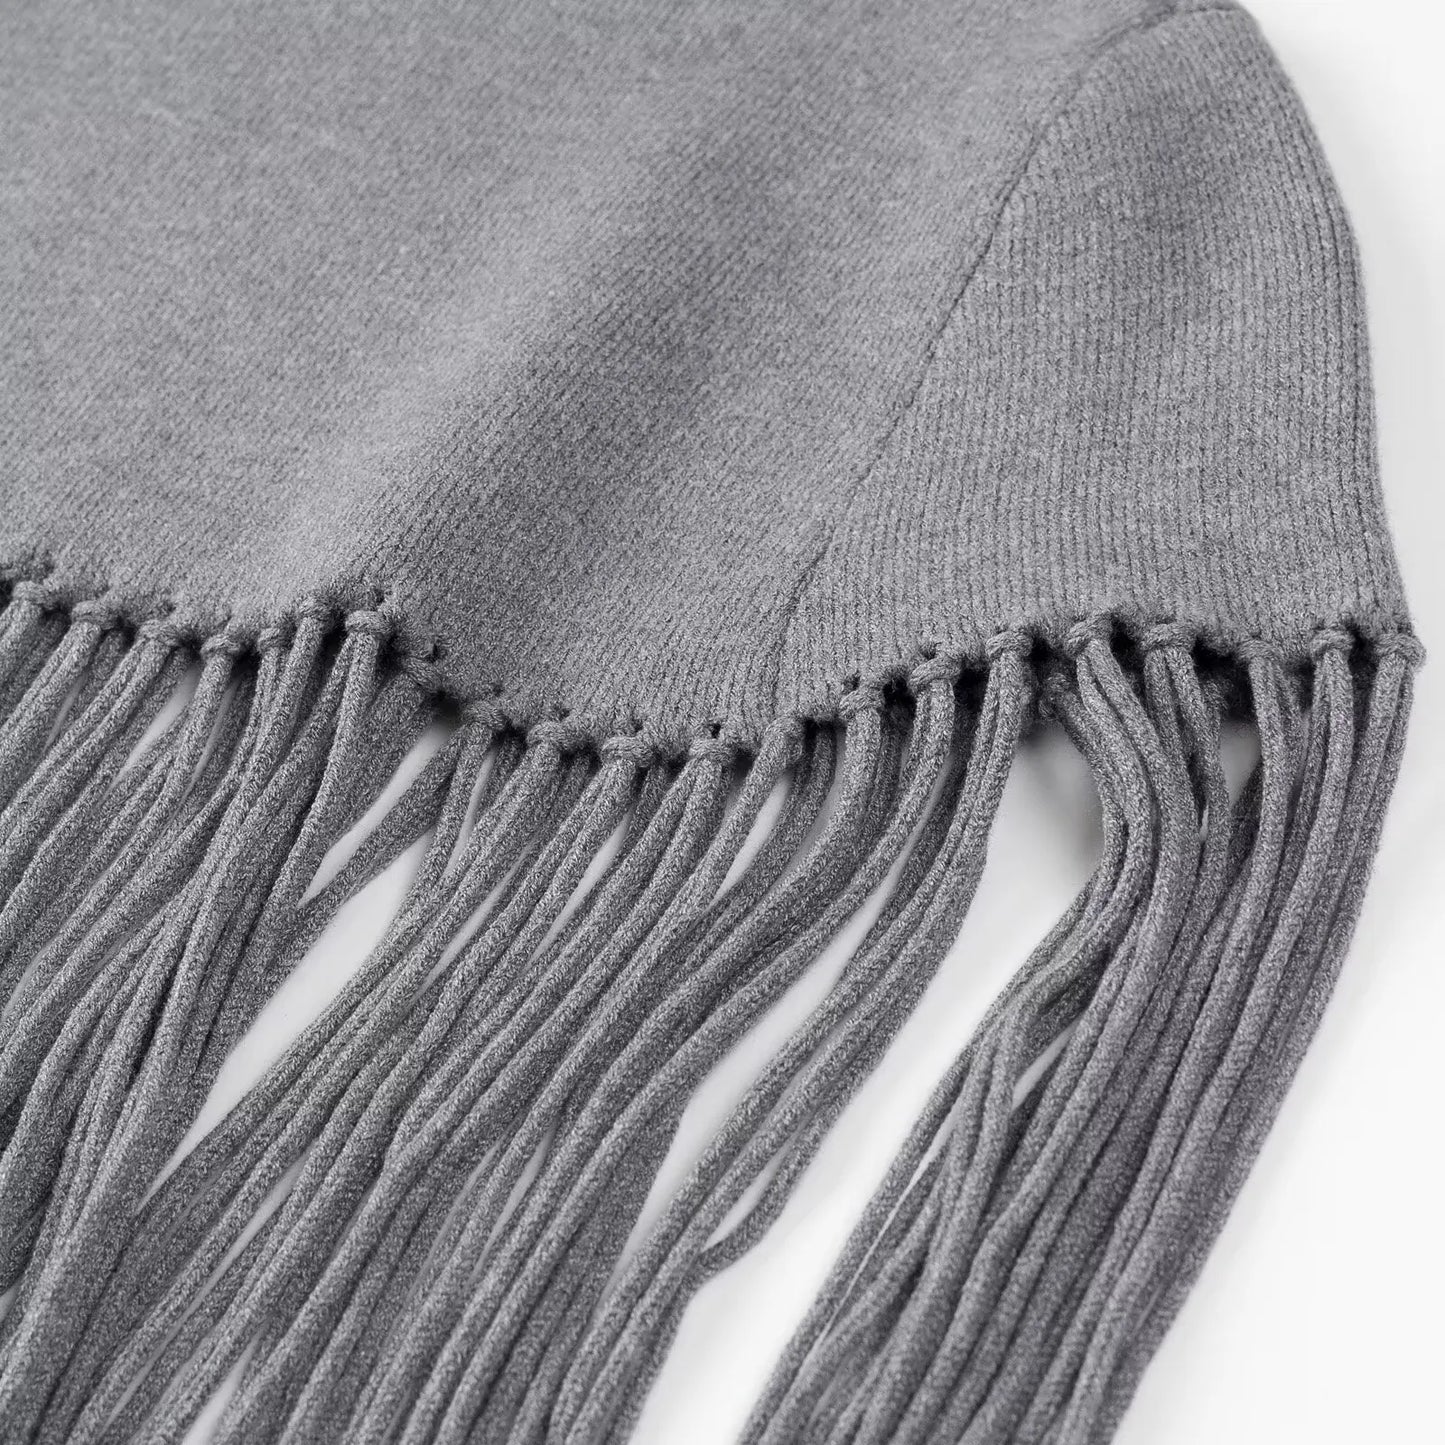 Gray Knit Long Tassel Cape Pullover Sweater